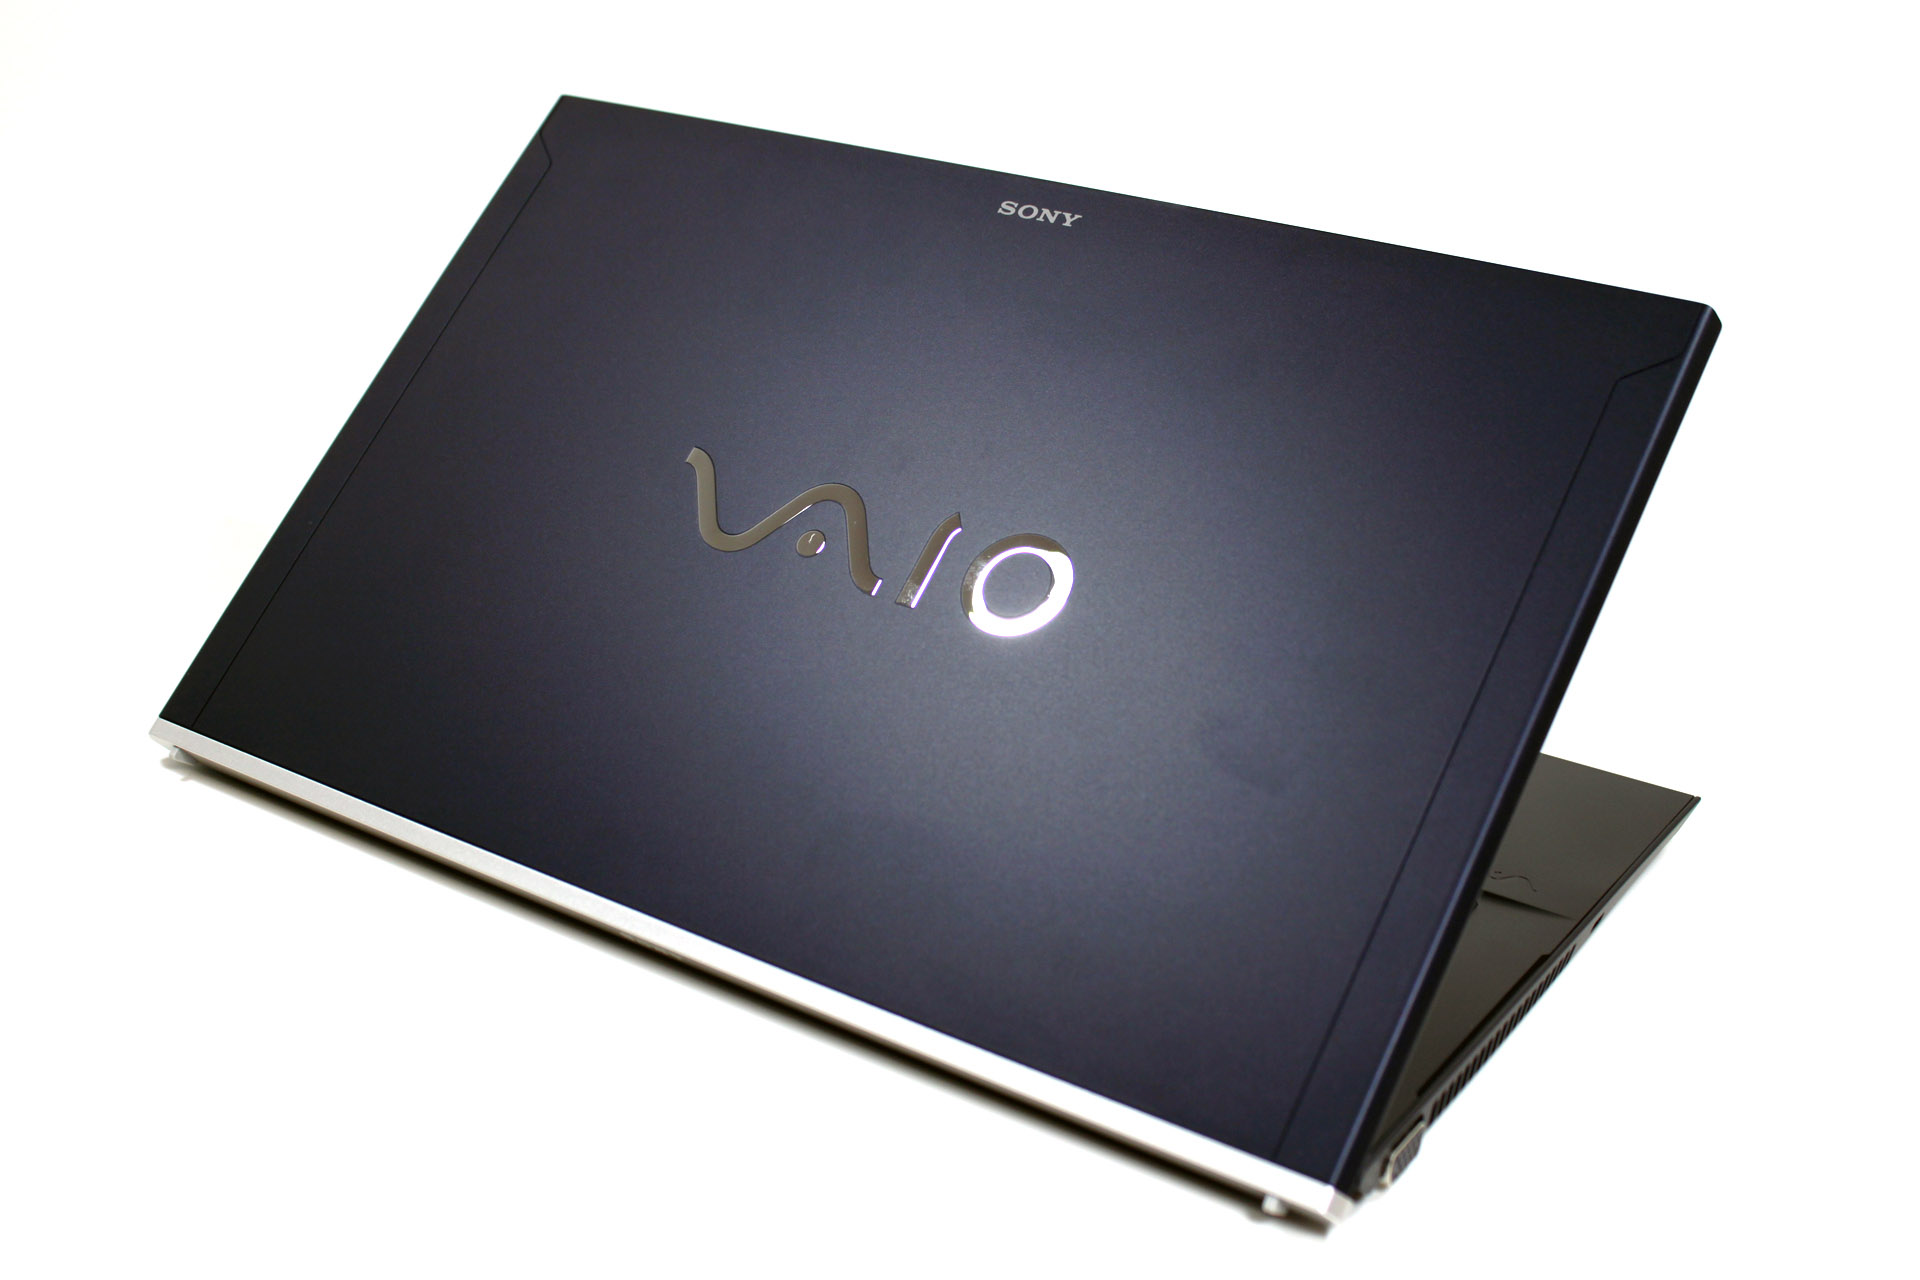 Sony Vaio VPC-Z21Q9E - Notebookcheck.net External Reviews